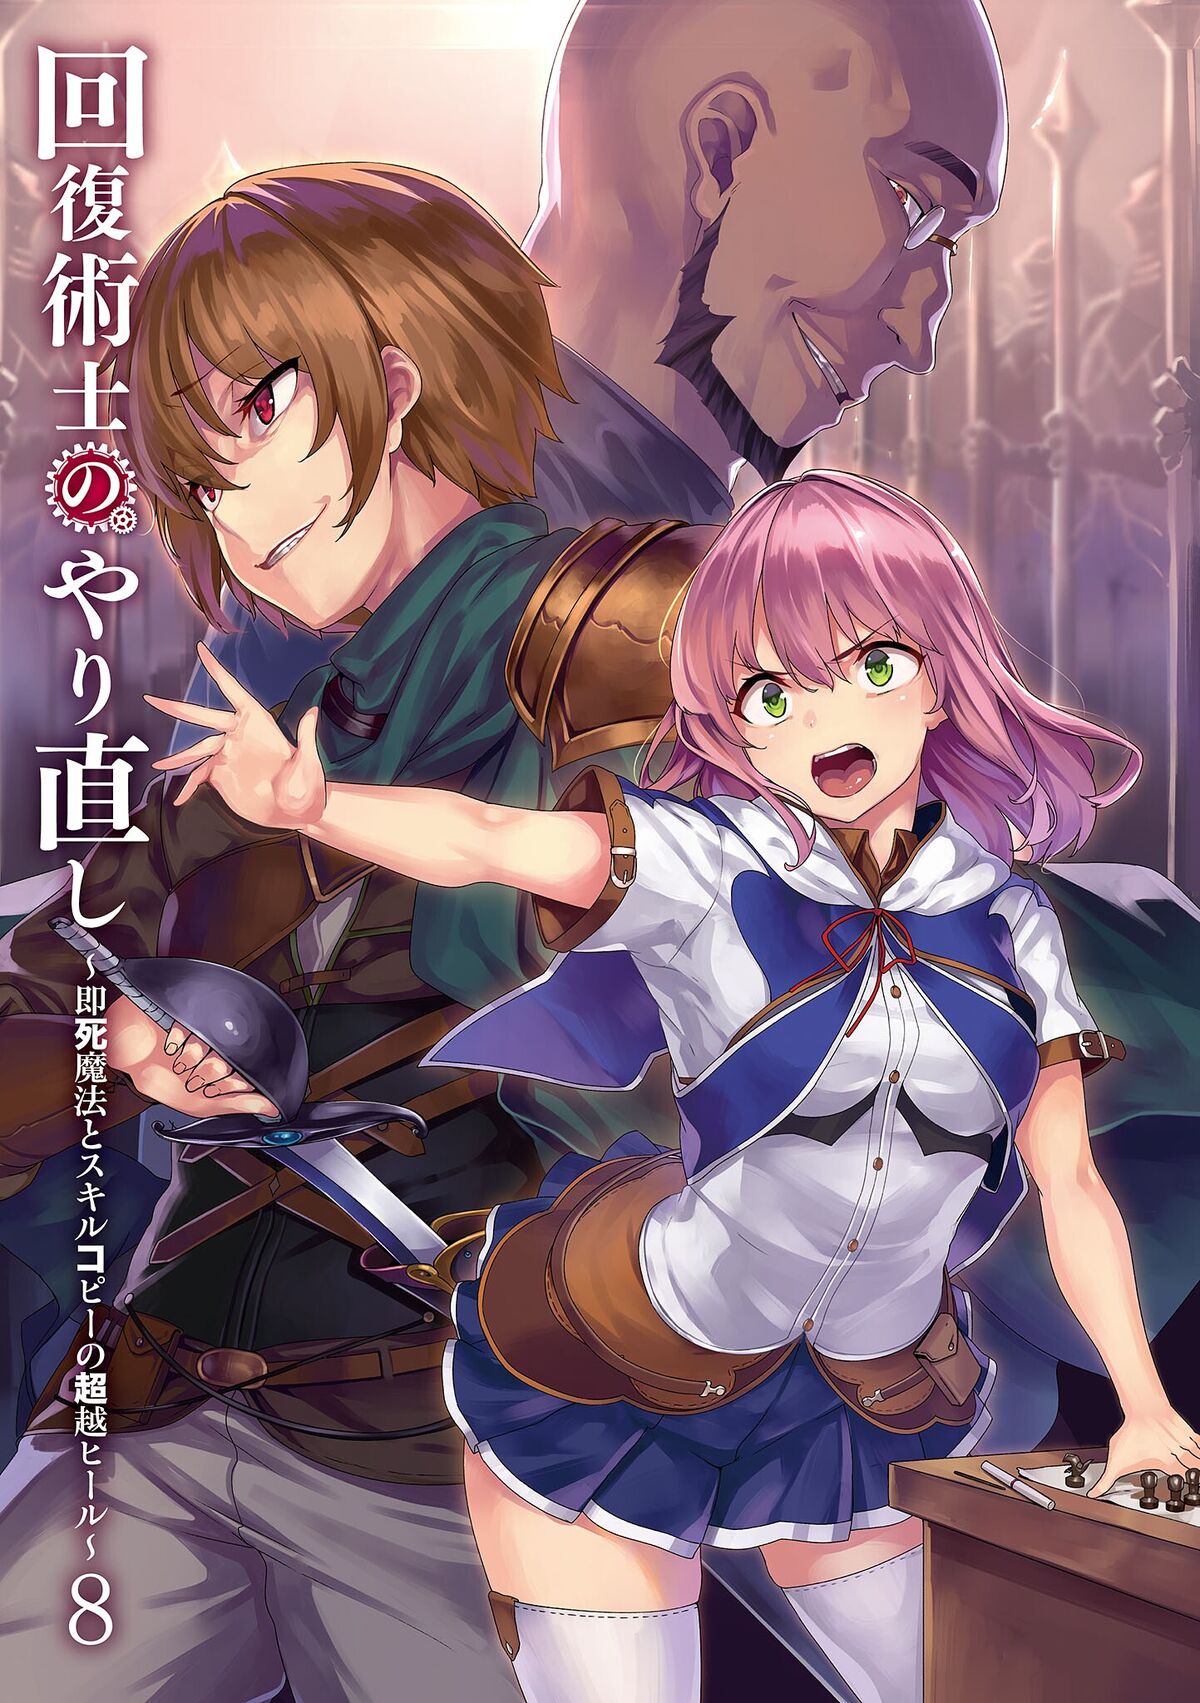 Light Novel Volume 8/Illustrations, Kaifuku Jutsushi no Yarinaoshi Wiki, Fandom